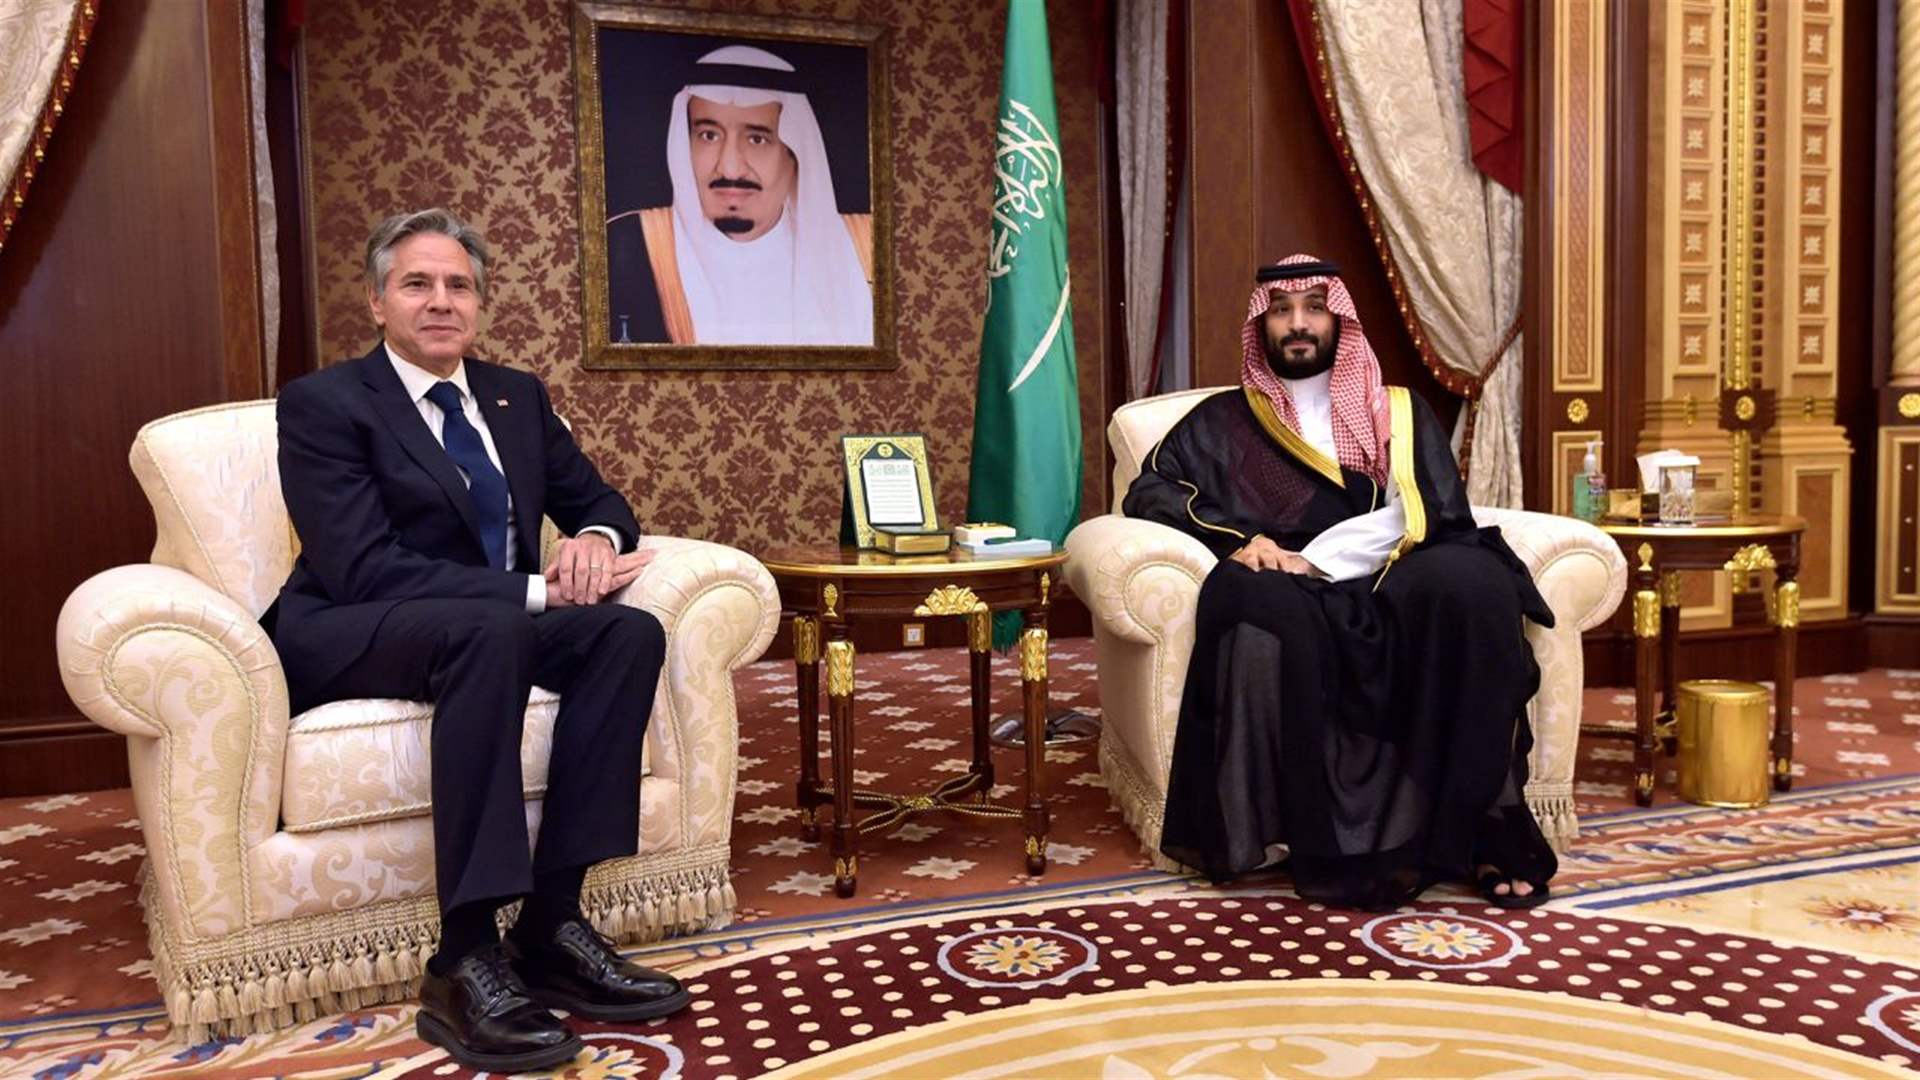 Diplomatic encounters: Blinken and Bin Salman discuss regional issues in Jeddah